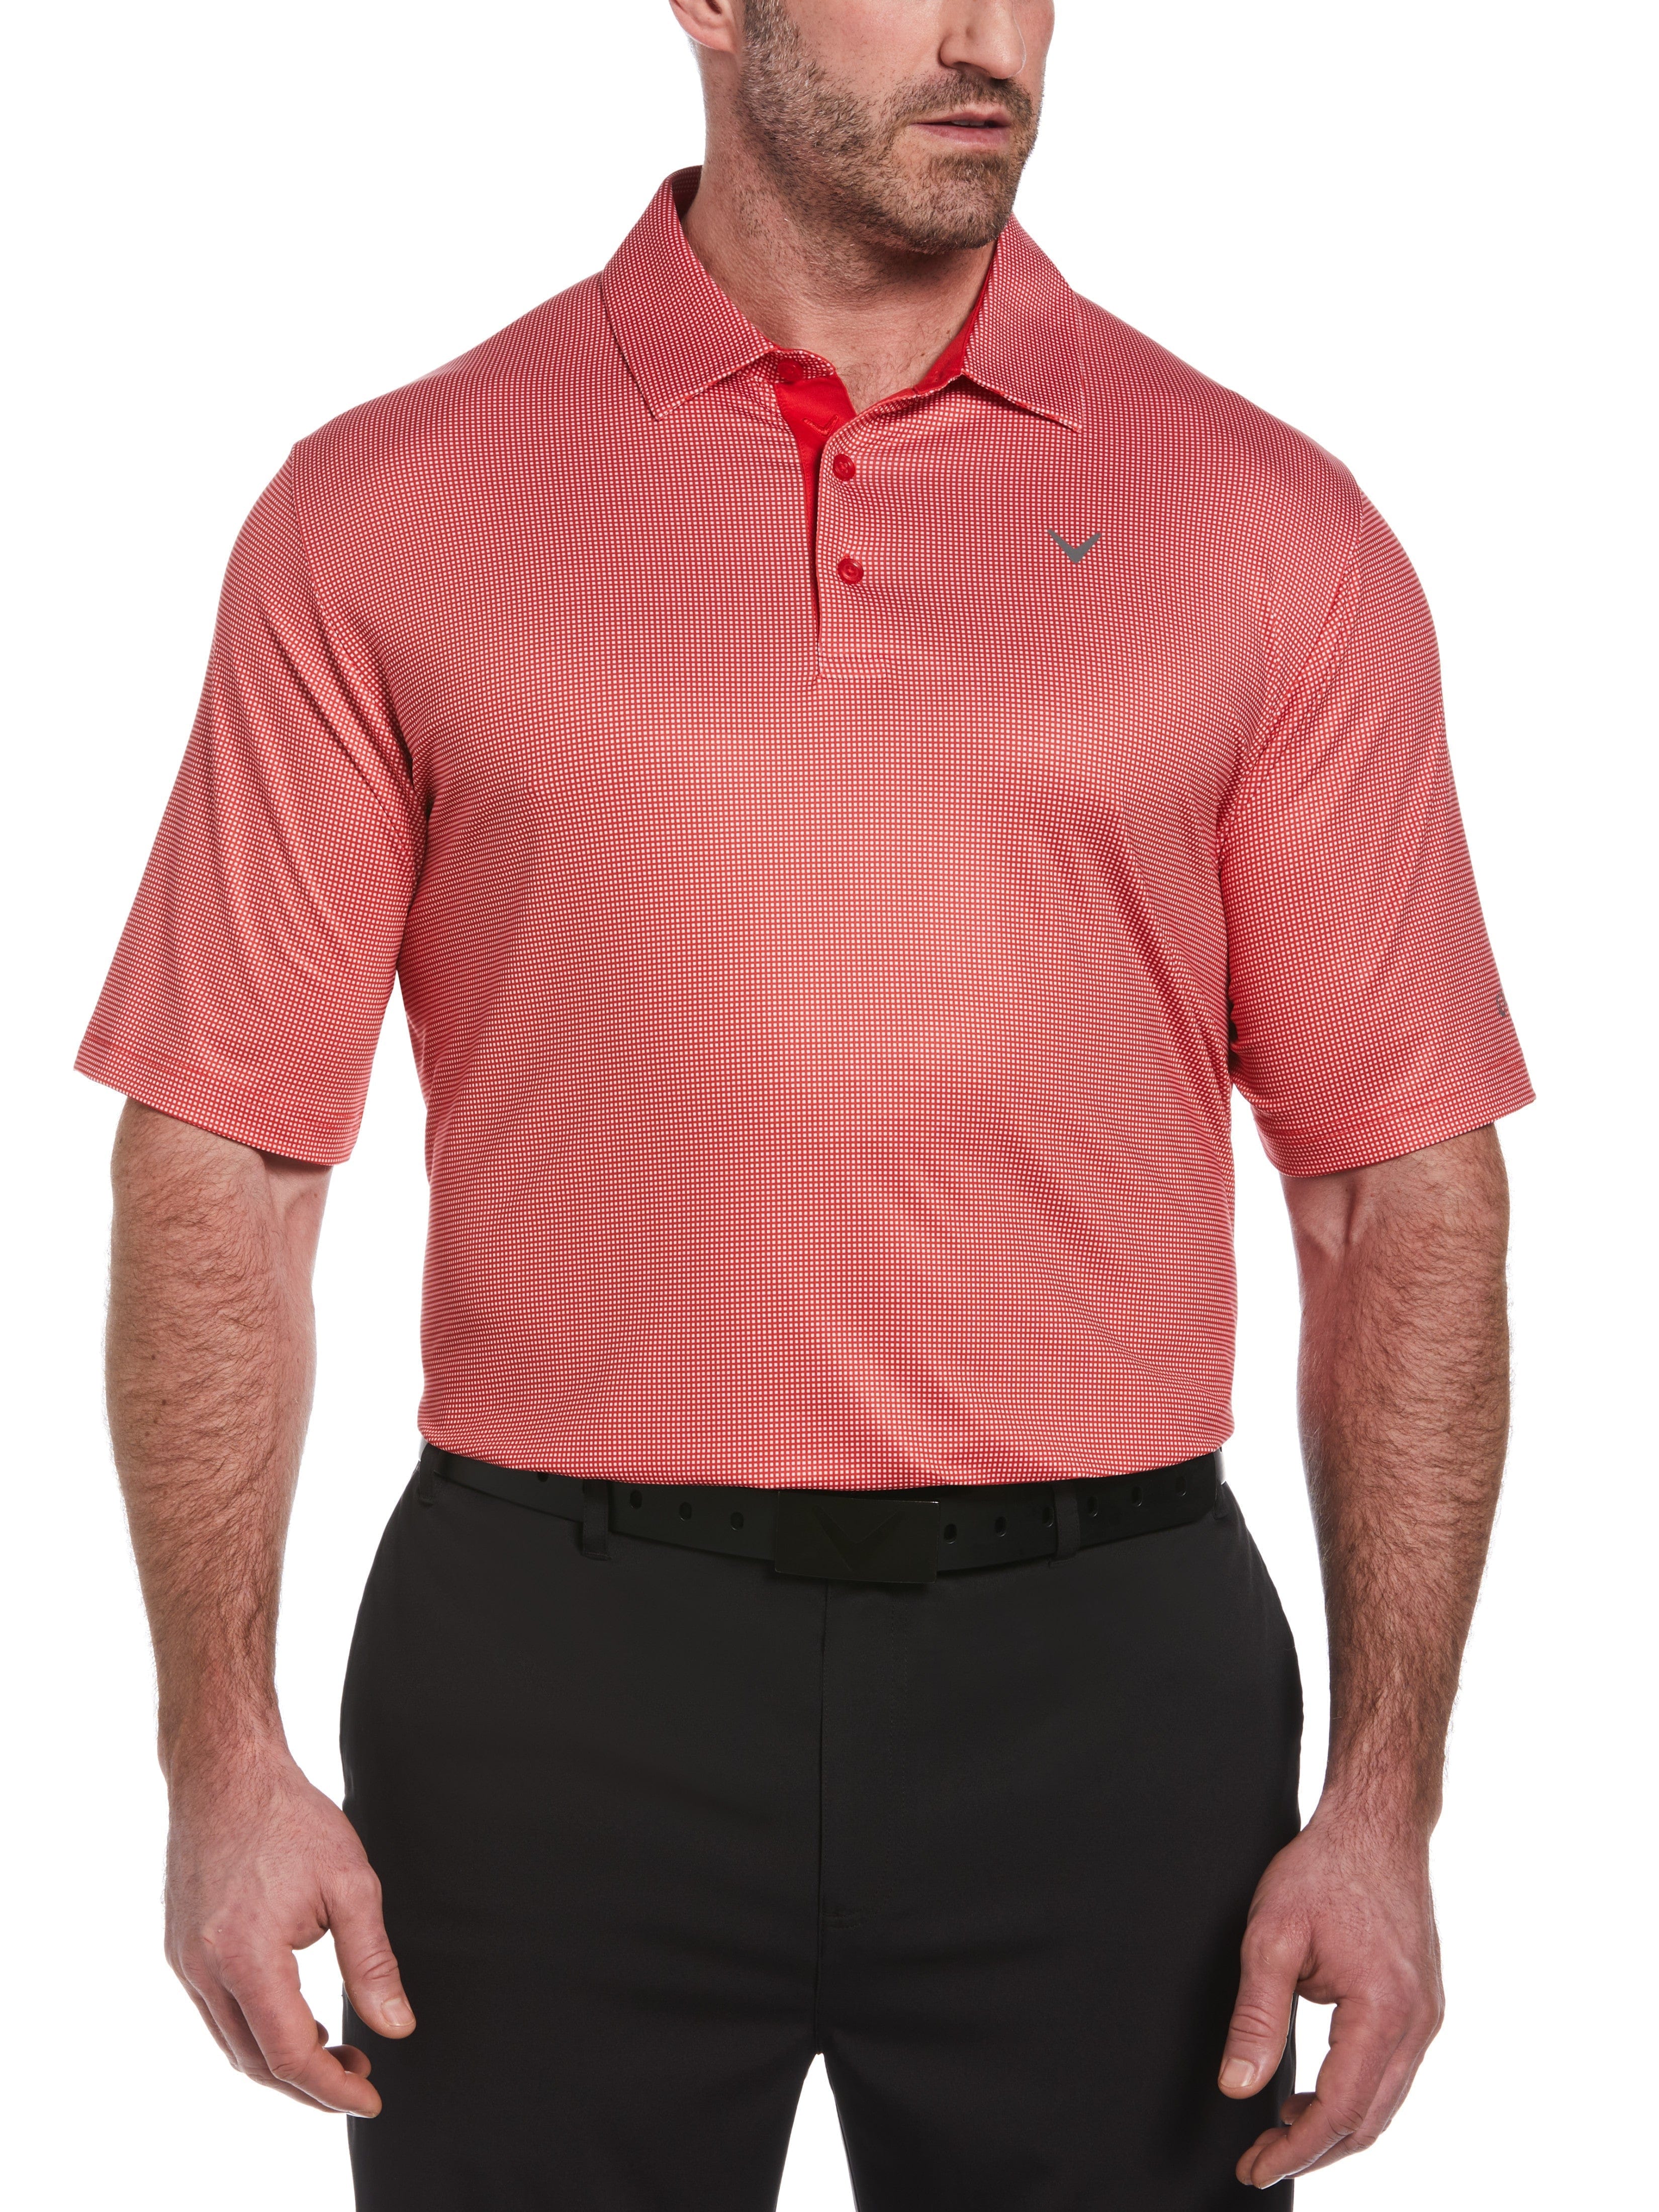 Callaway Apparel Mens Big & Tall Printed Gingham Swing Tech Polo Shirt, Size LT, Tango Red, Polyester/Elastane | Golf Apparel Shop